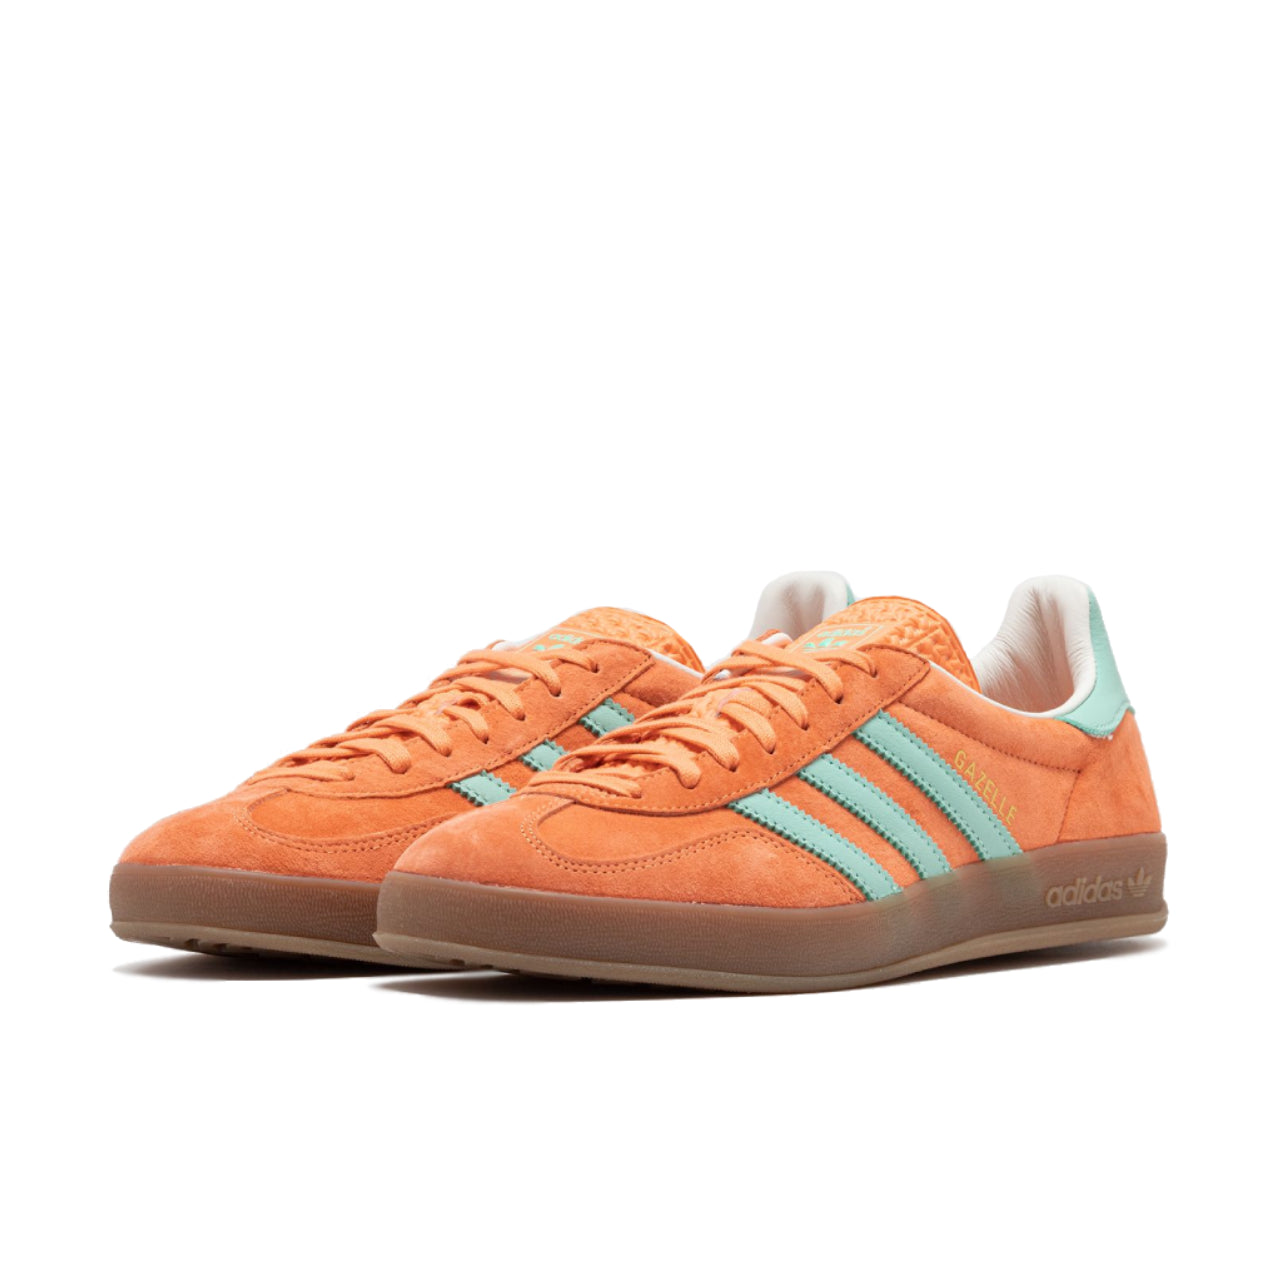 adidas Gazelle Indoor Easy Orange - IH7499 - Medial